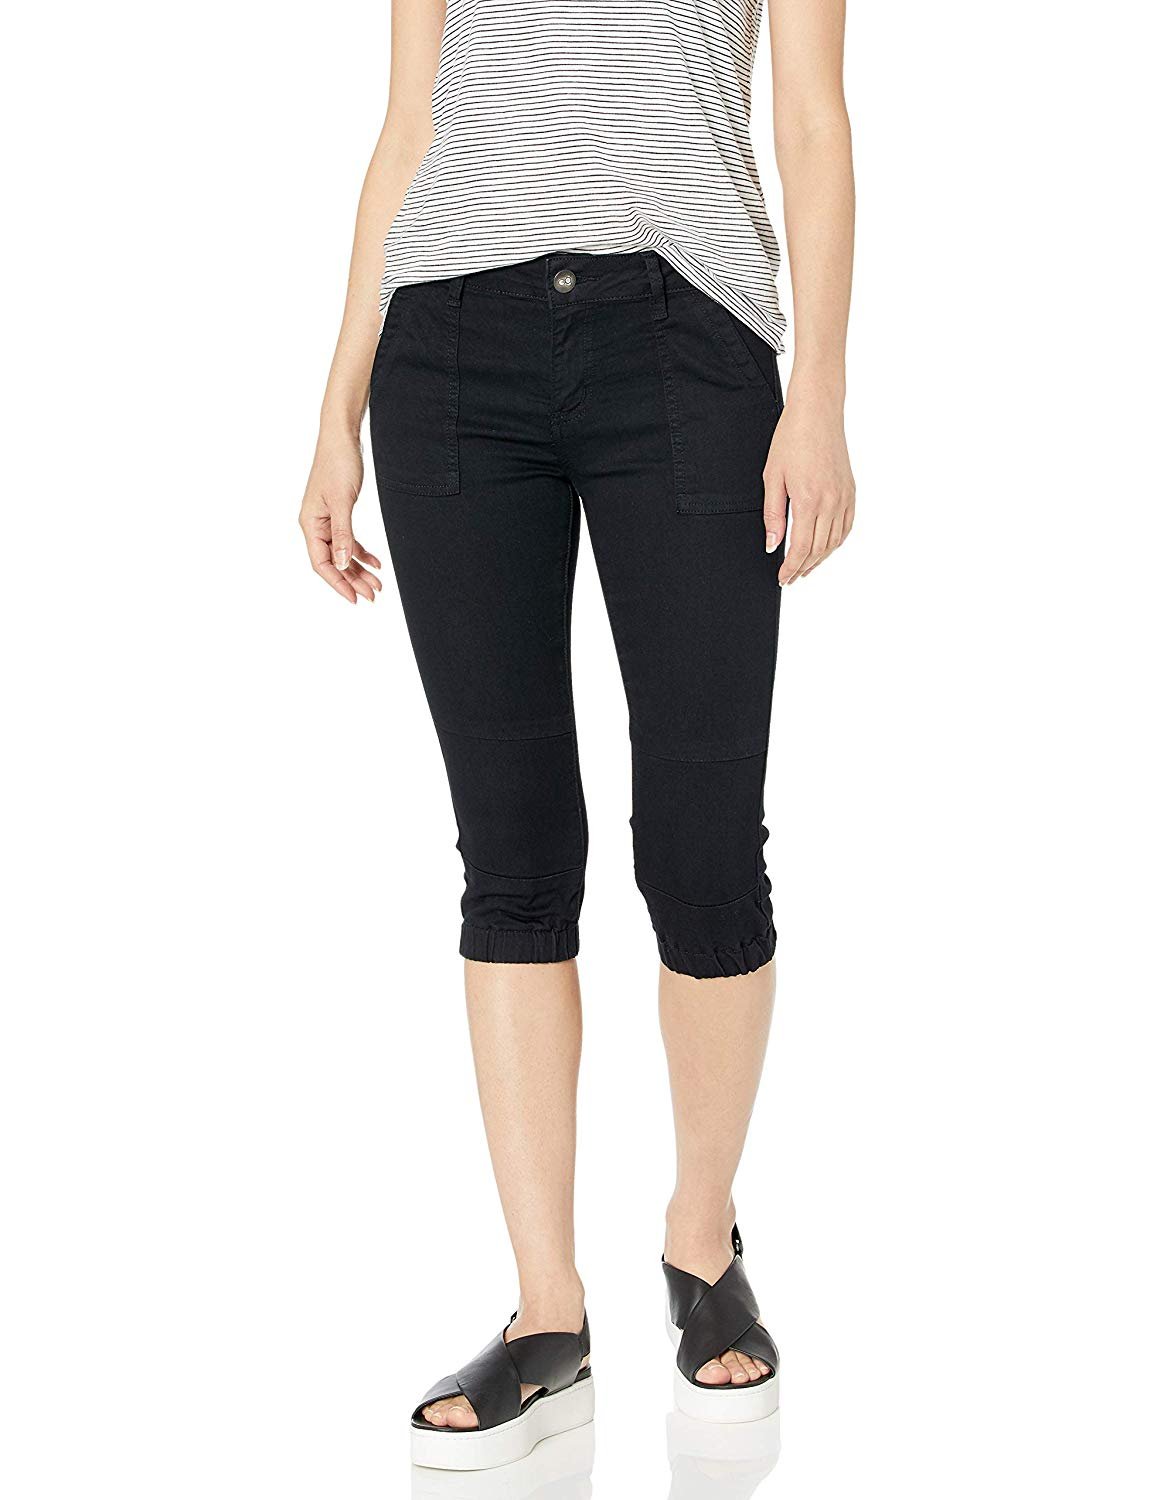 Cute Teen Girl Jeans Plus Size Capri Pants for Teen Girls in Black Denim Size 24W - image 1 of 4